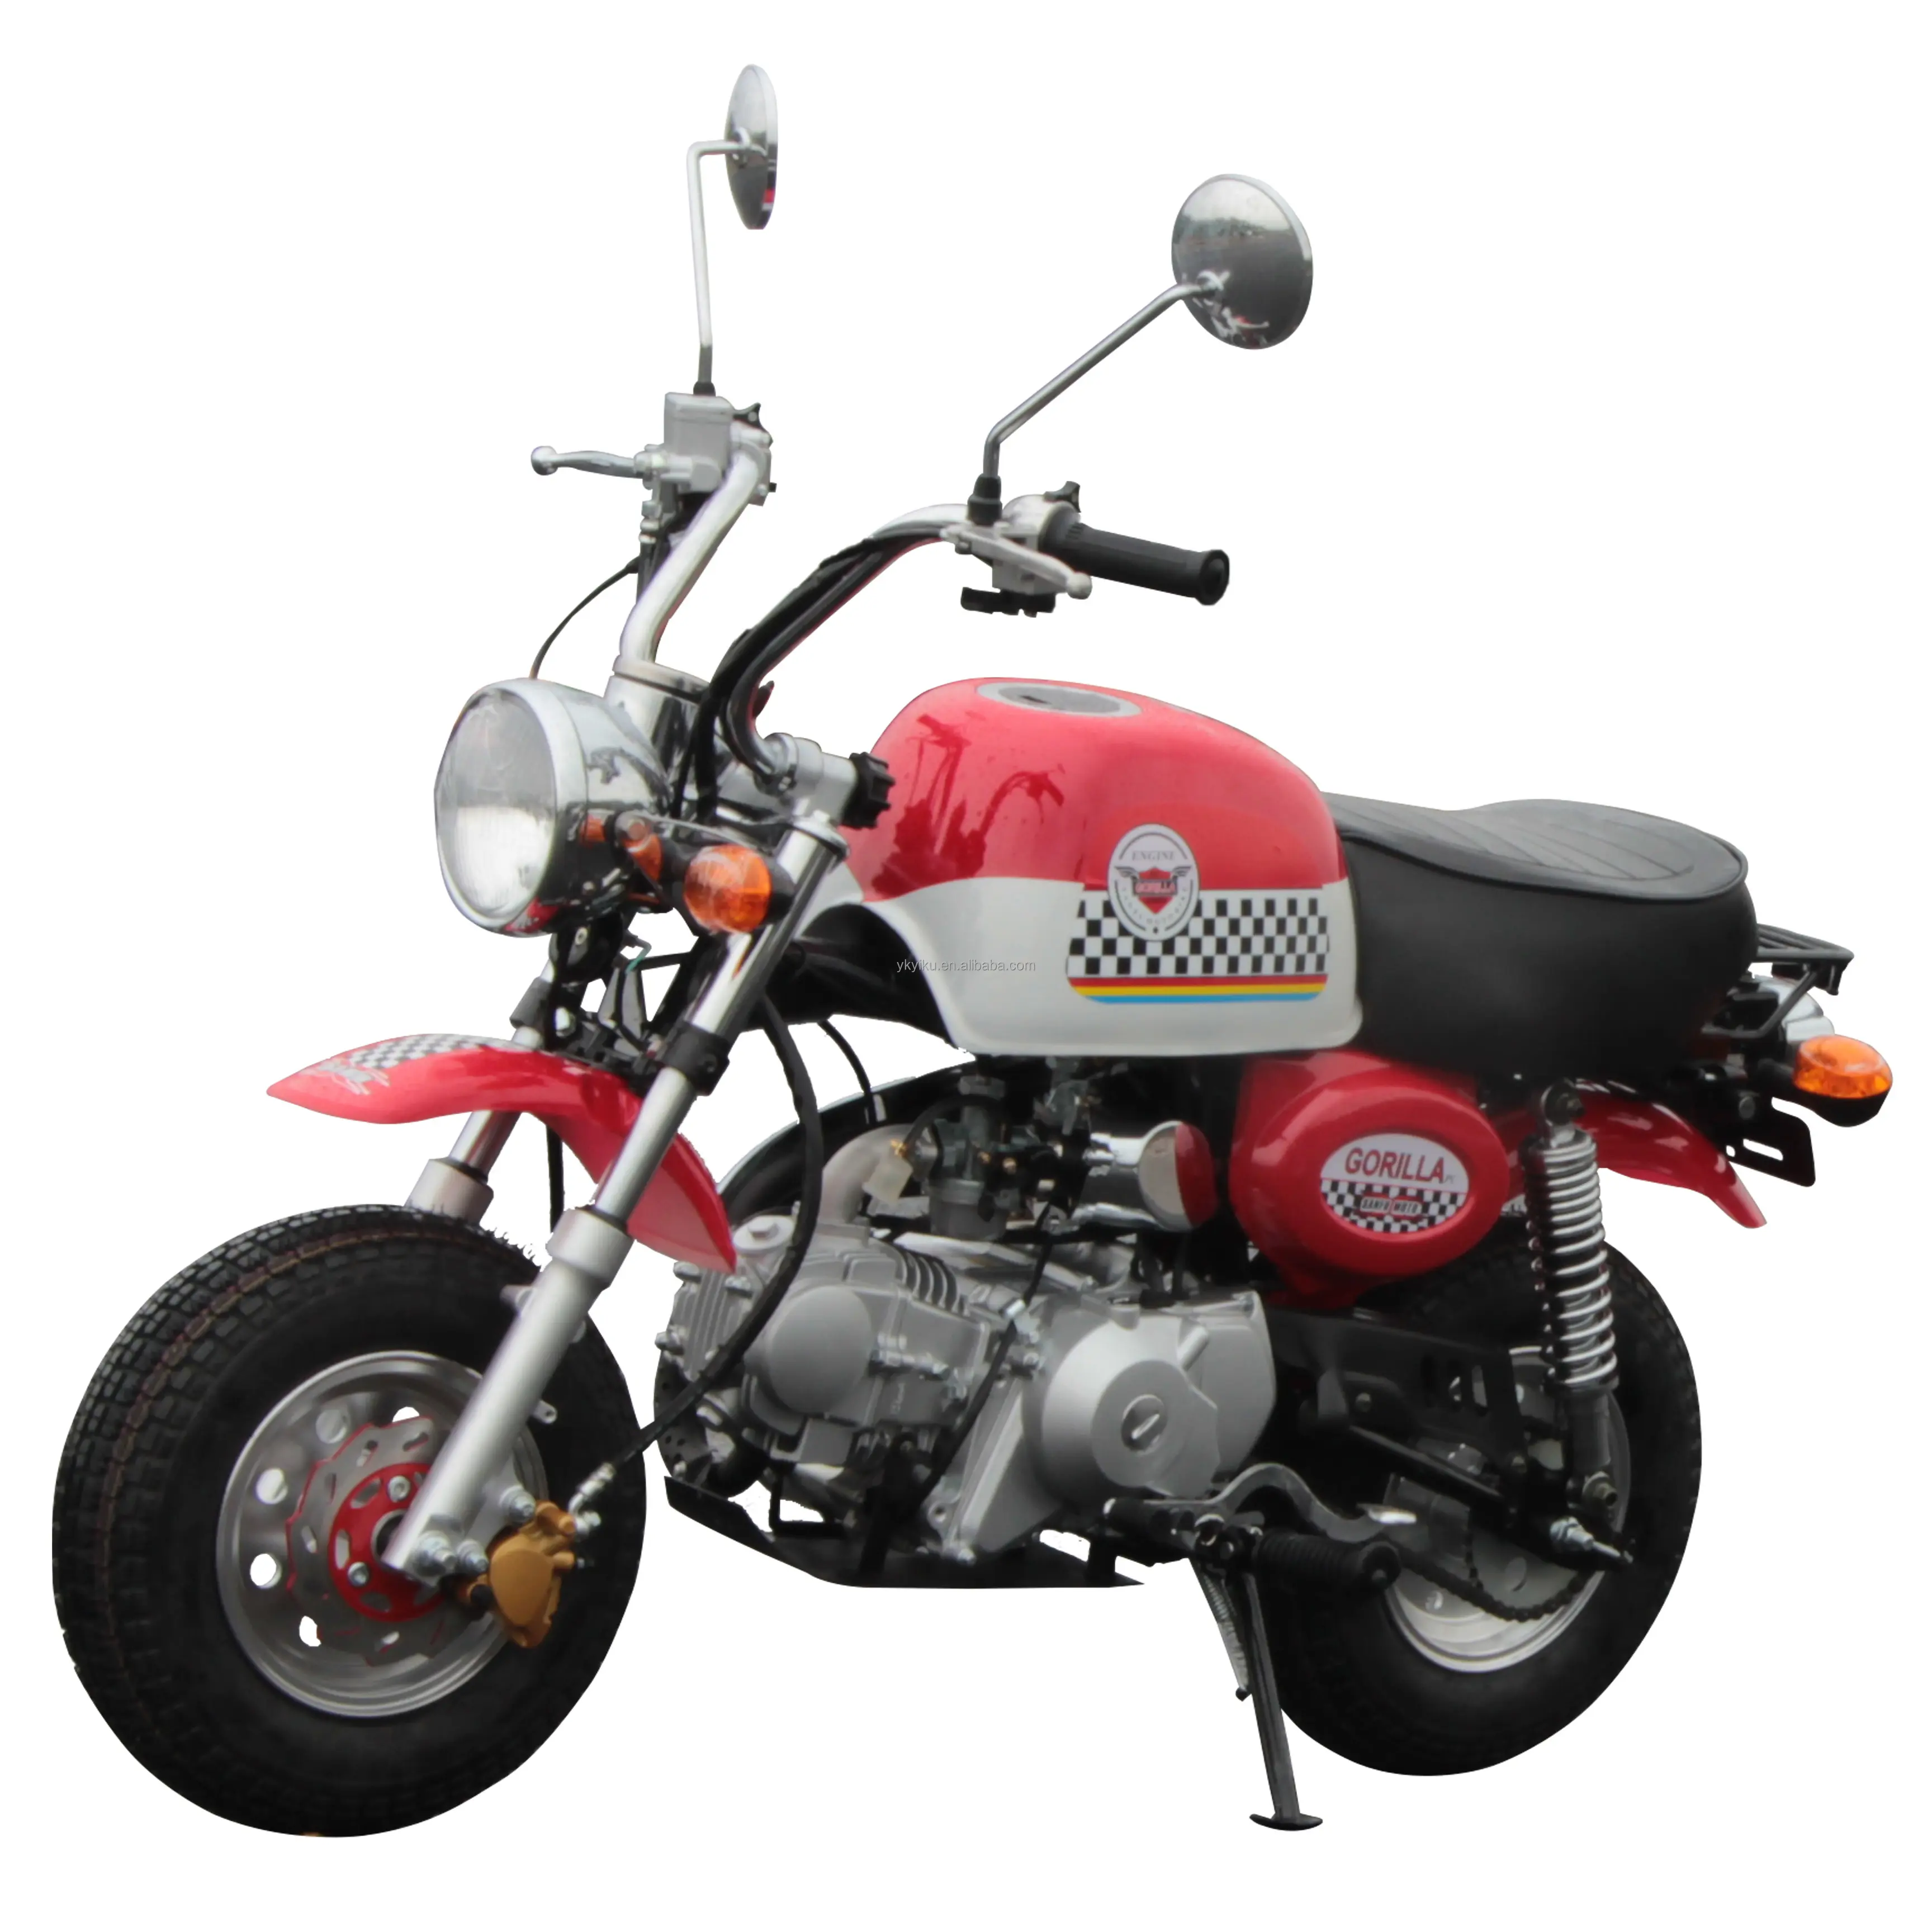 नई मॉडल 110cc 125cc मिनी बंदर लंगूर गैस सड़क बाइक गैस पेट्रोल मोटरसाइकिल